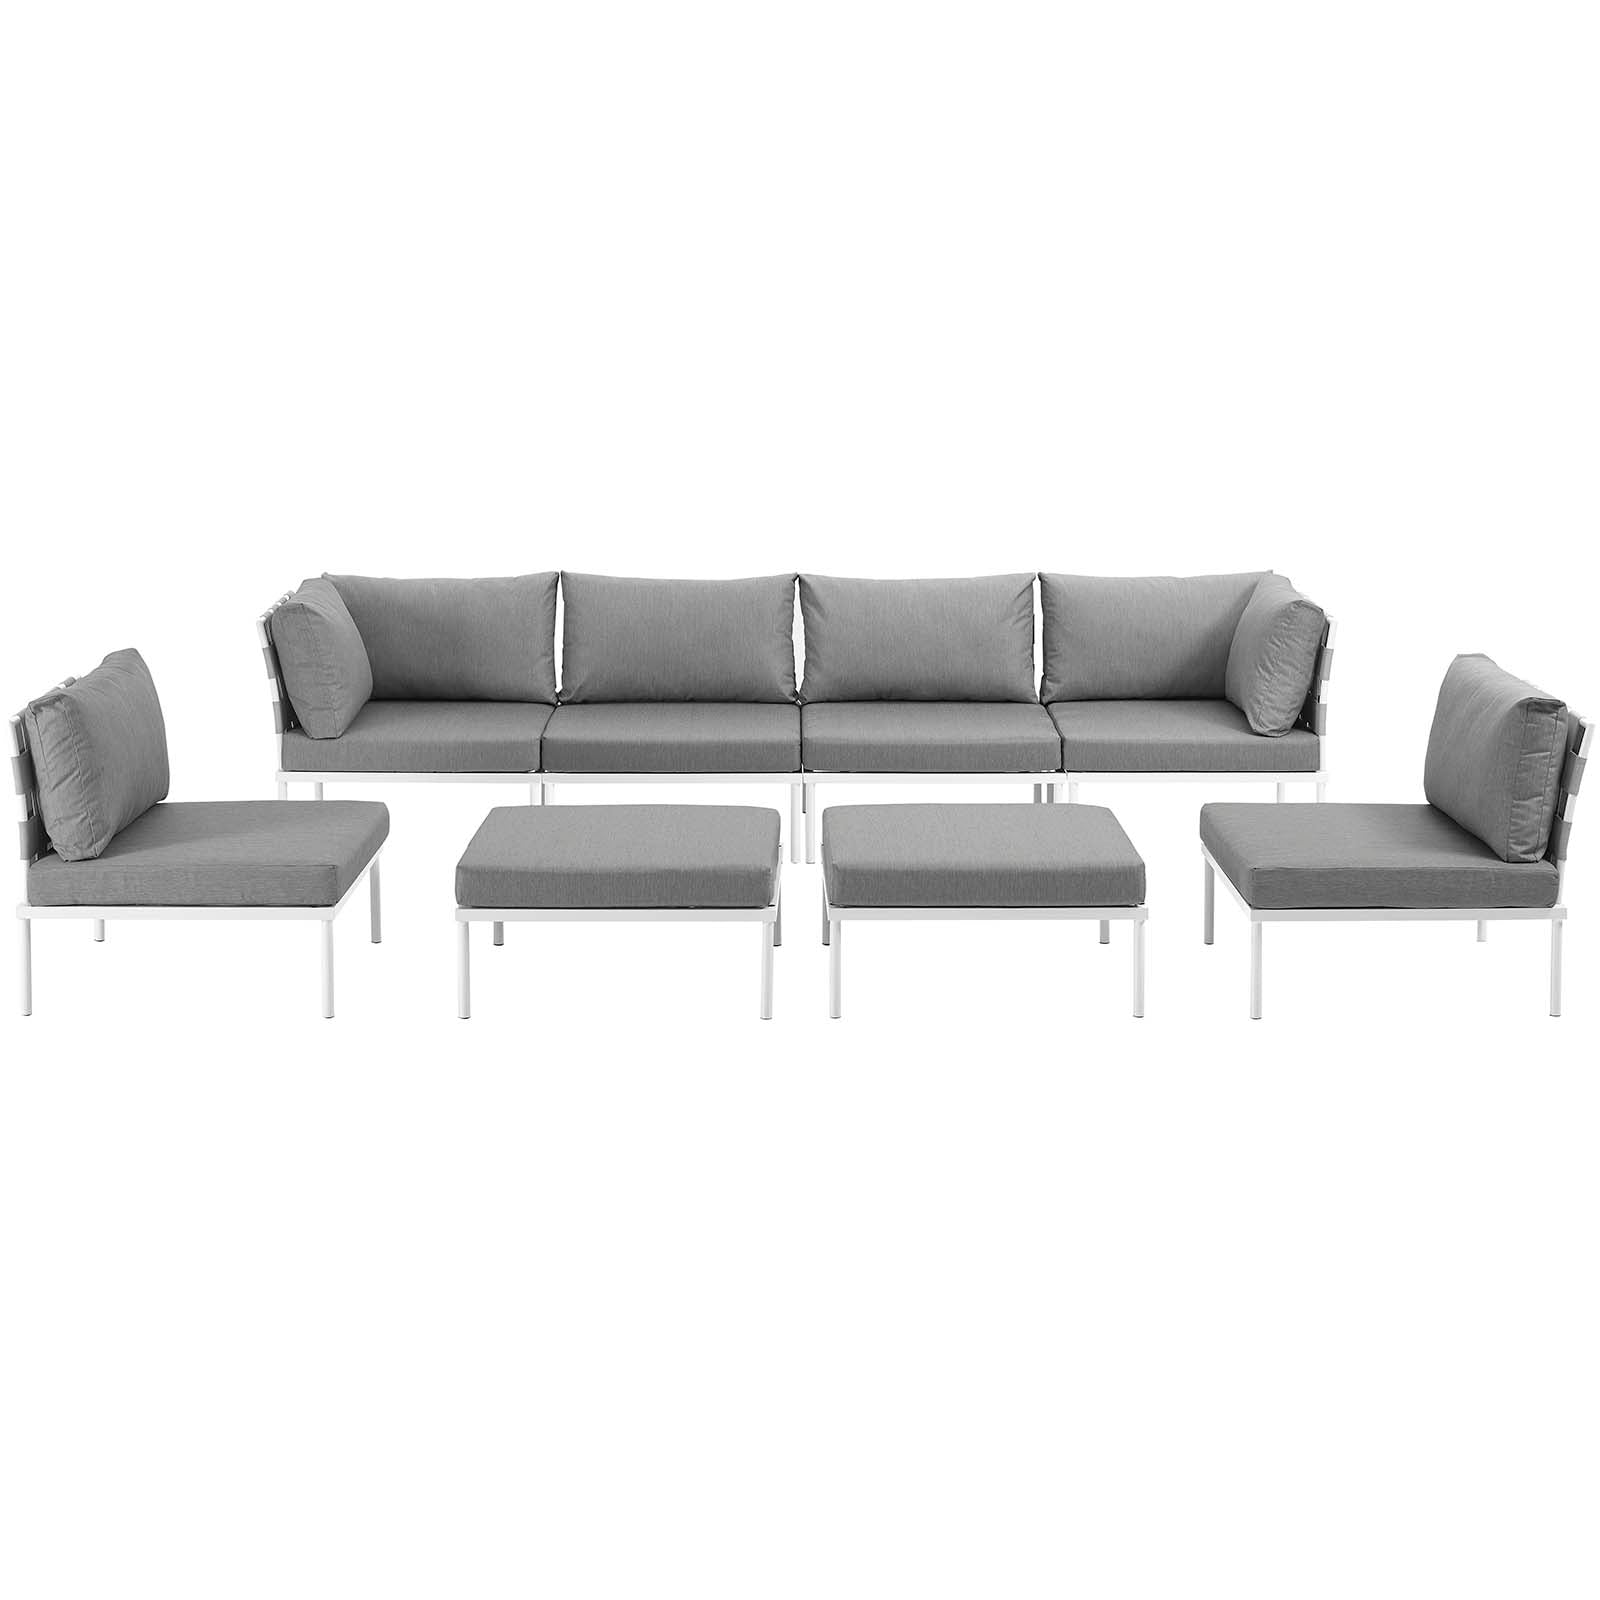 Harmony 8 Piece Outdoor Patio Aluminum Sectional Sofa Set - East Shore Modern Home Furnishings